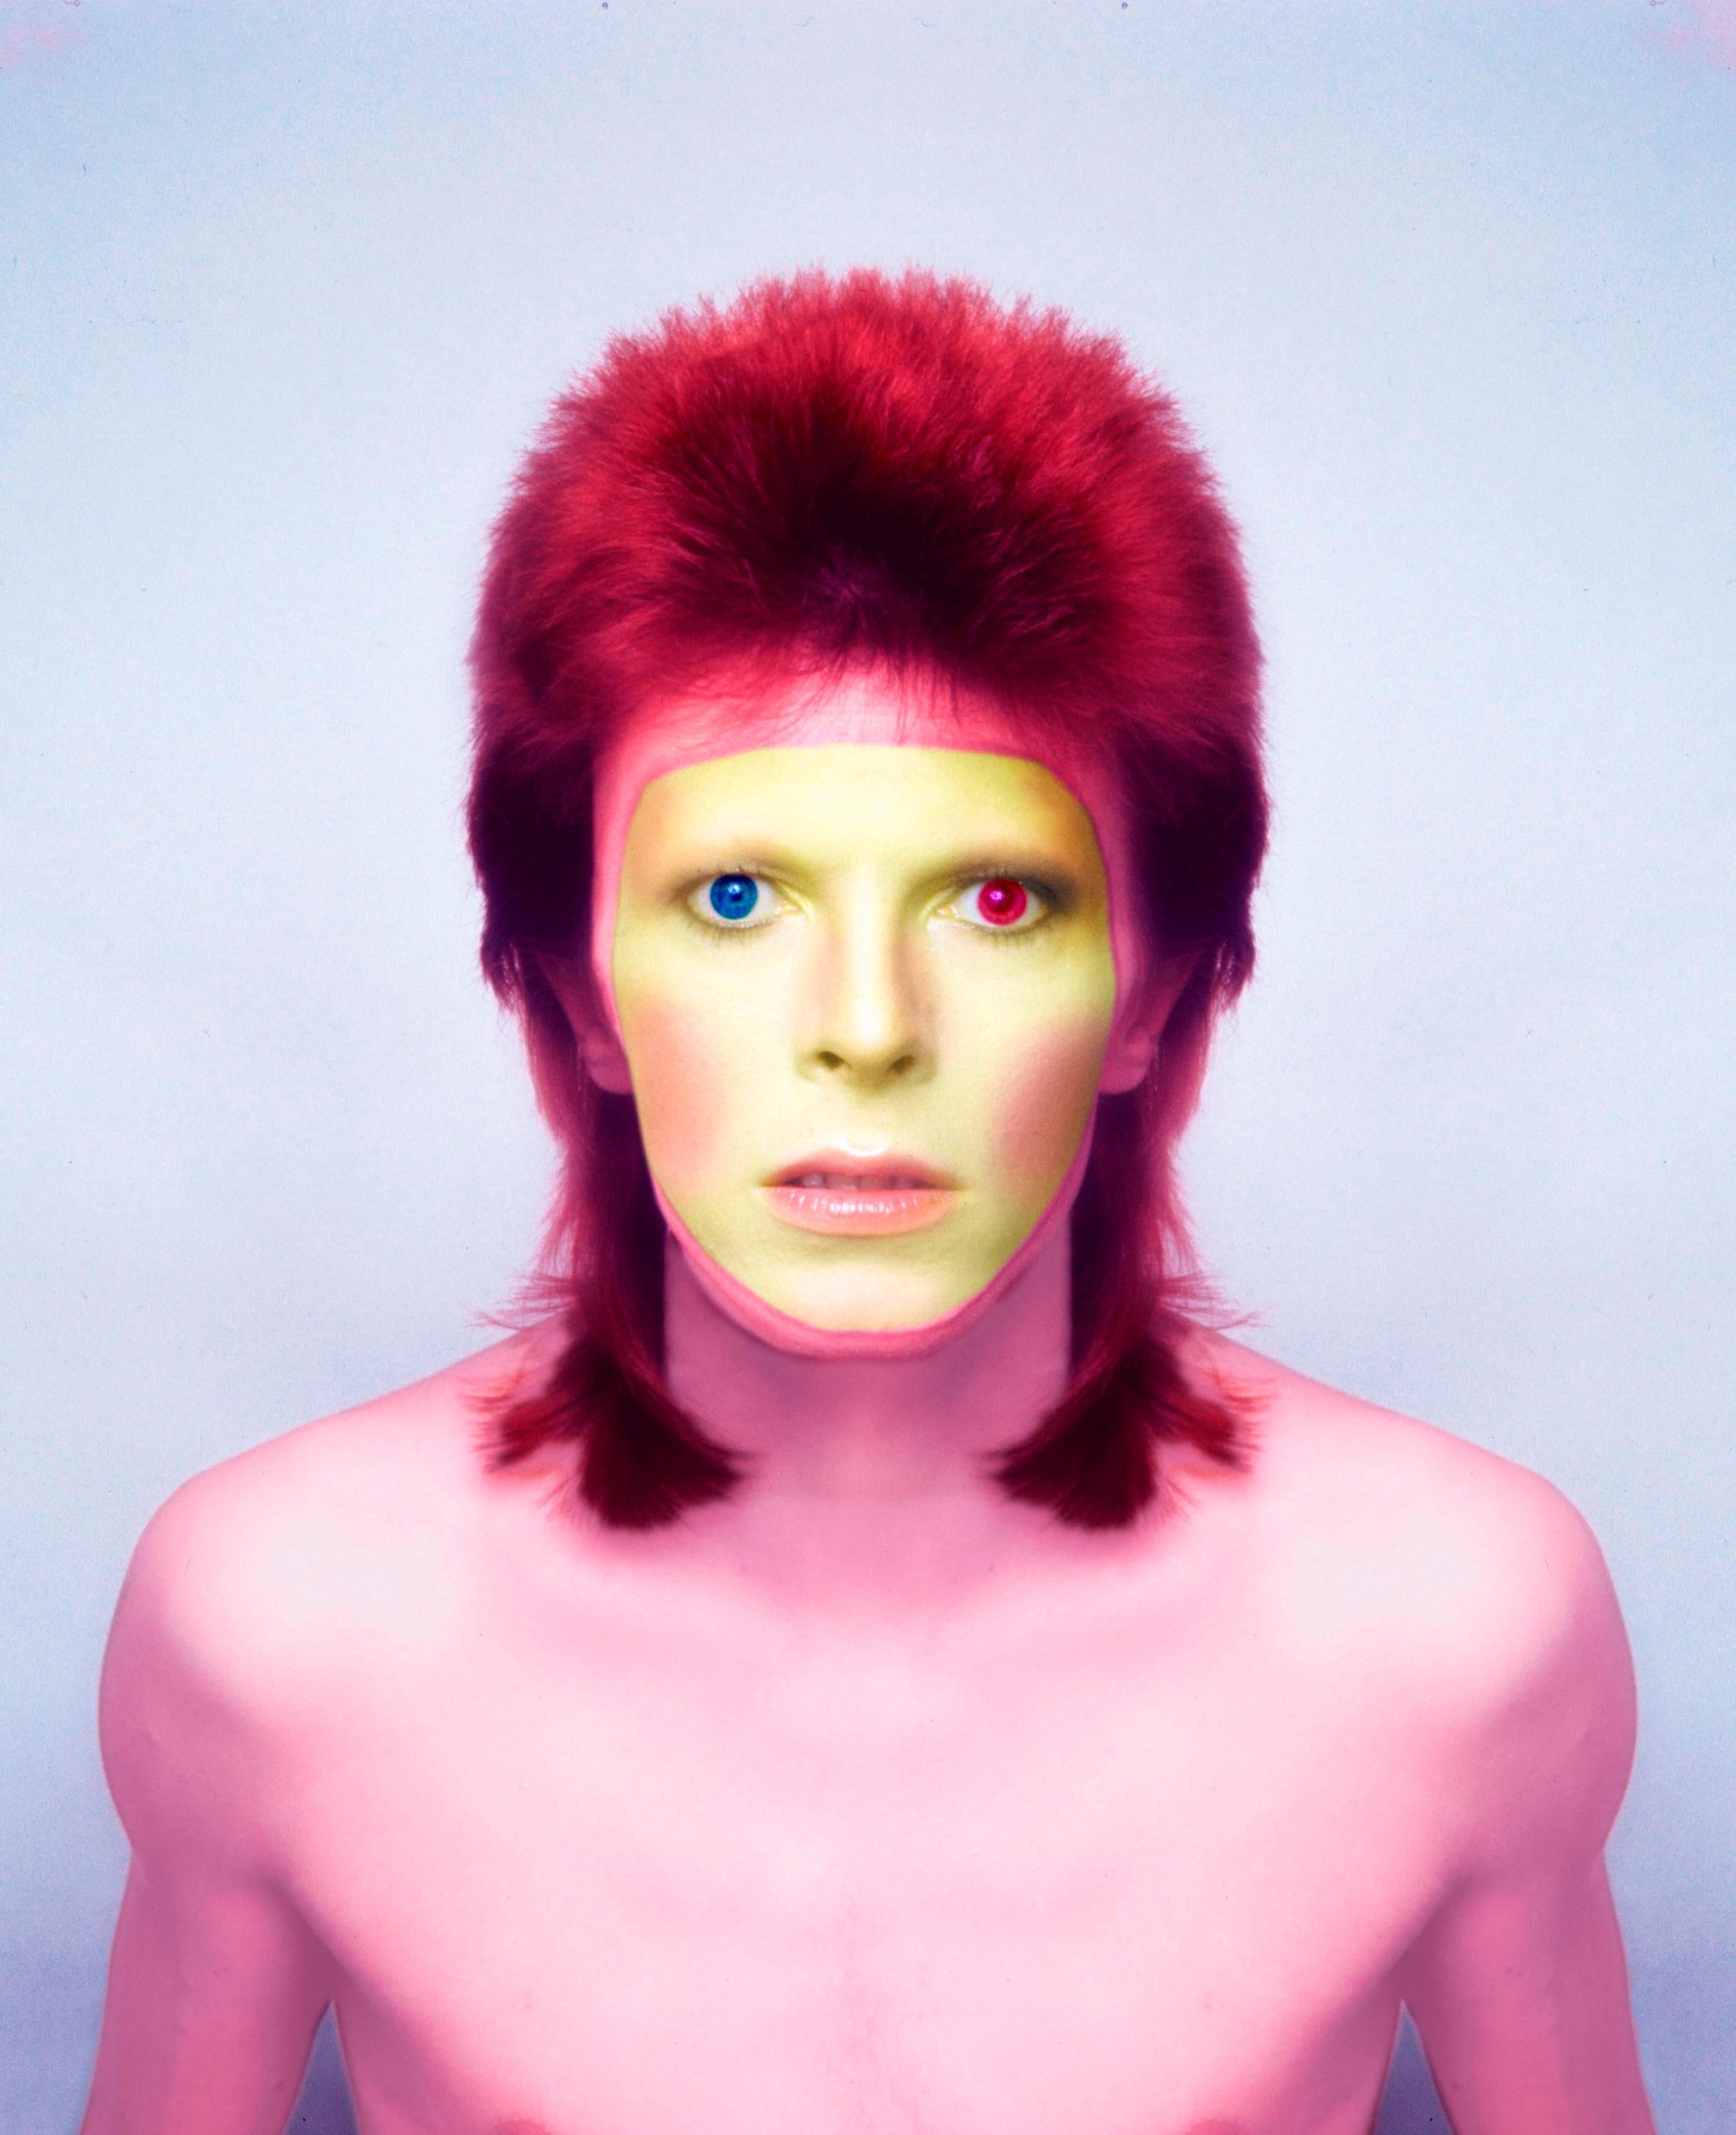 Justin de Villaneuve Color Photograph - David Bowie "Pin Ups"